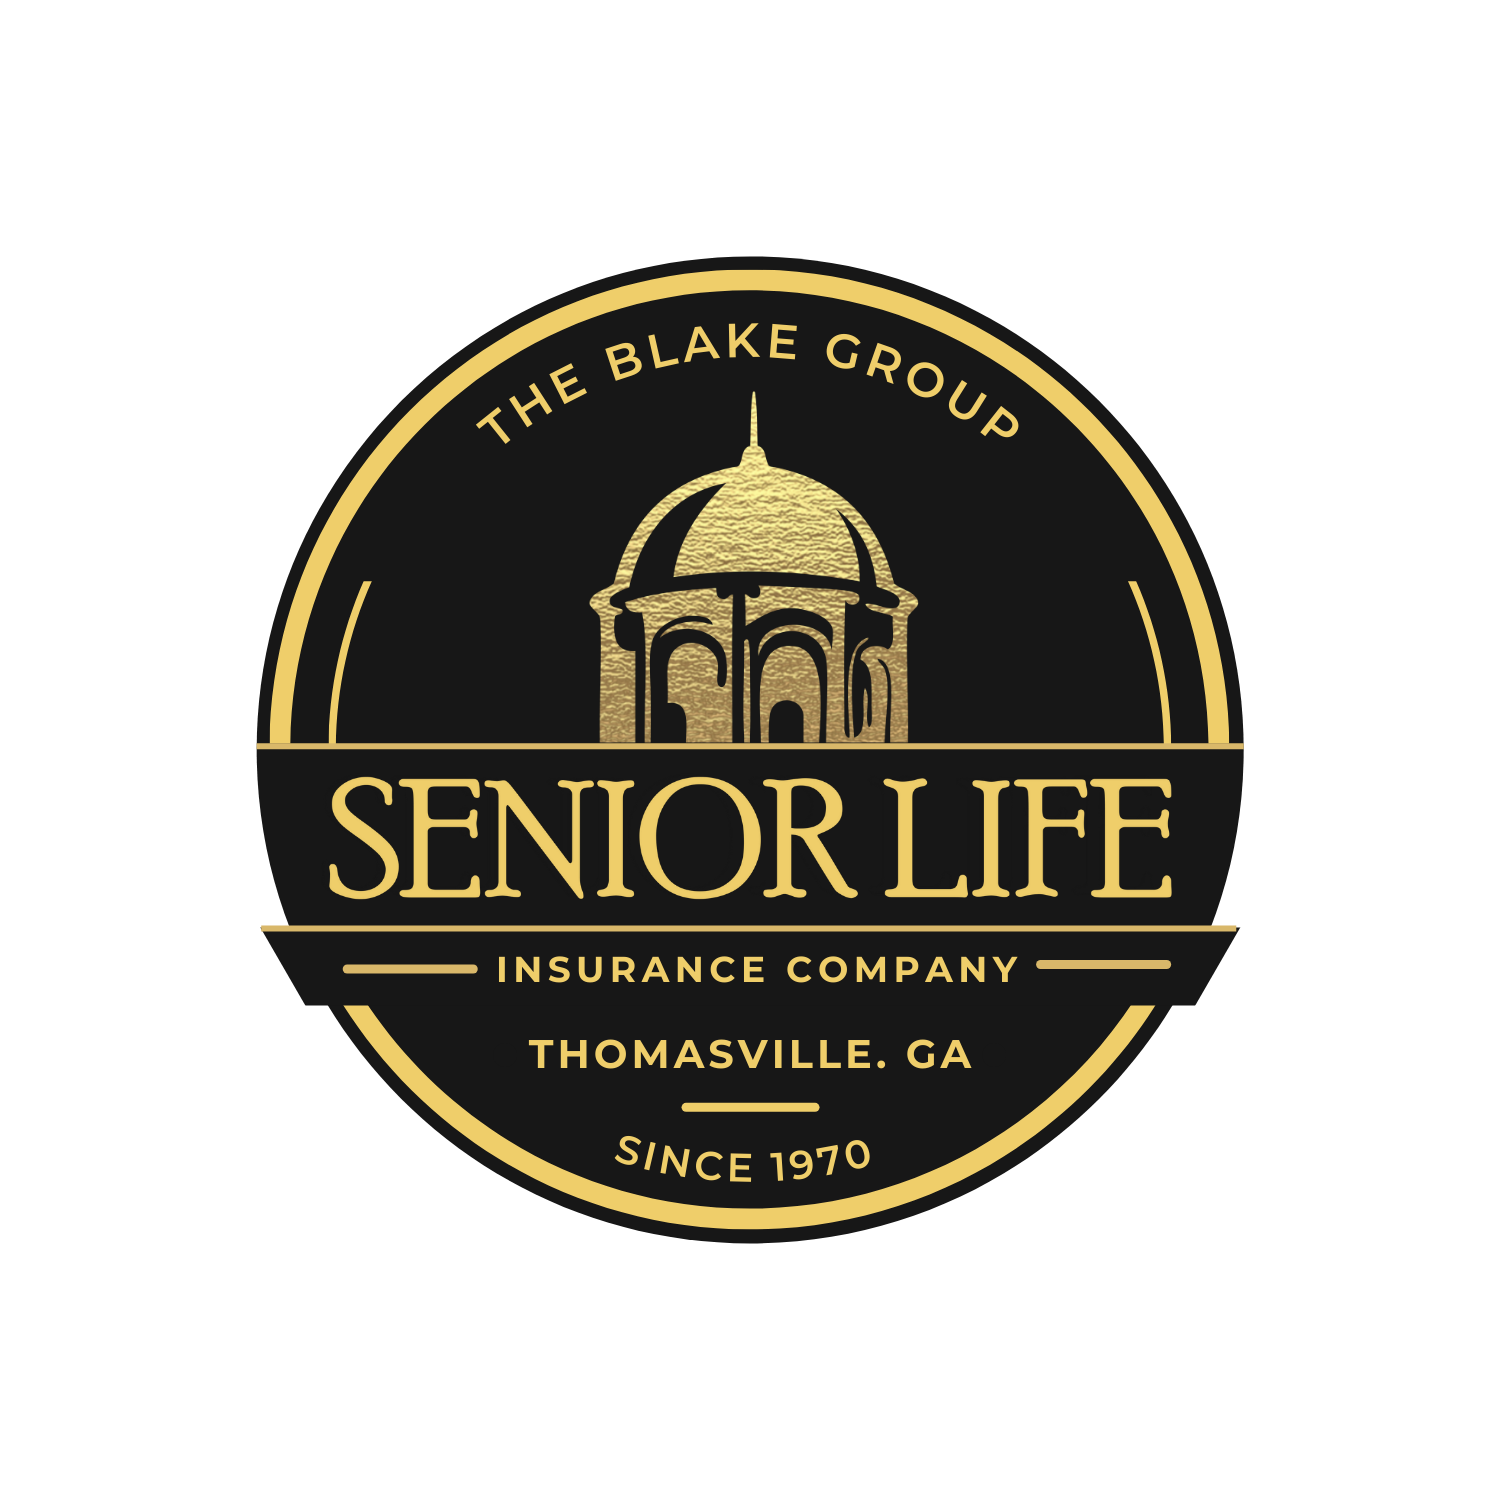 the blake group - senior life insurance company